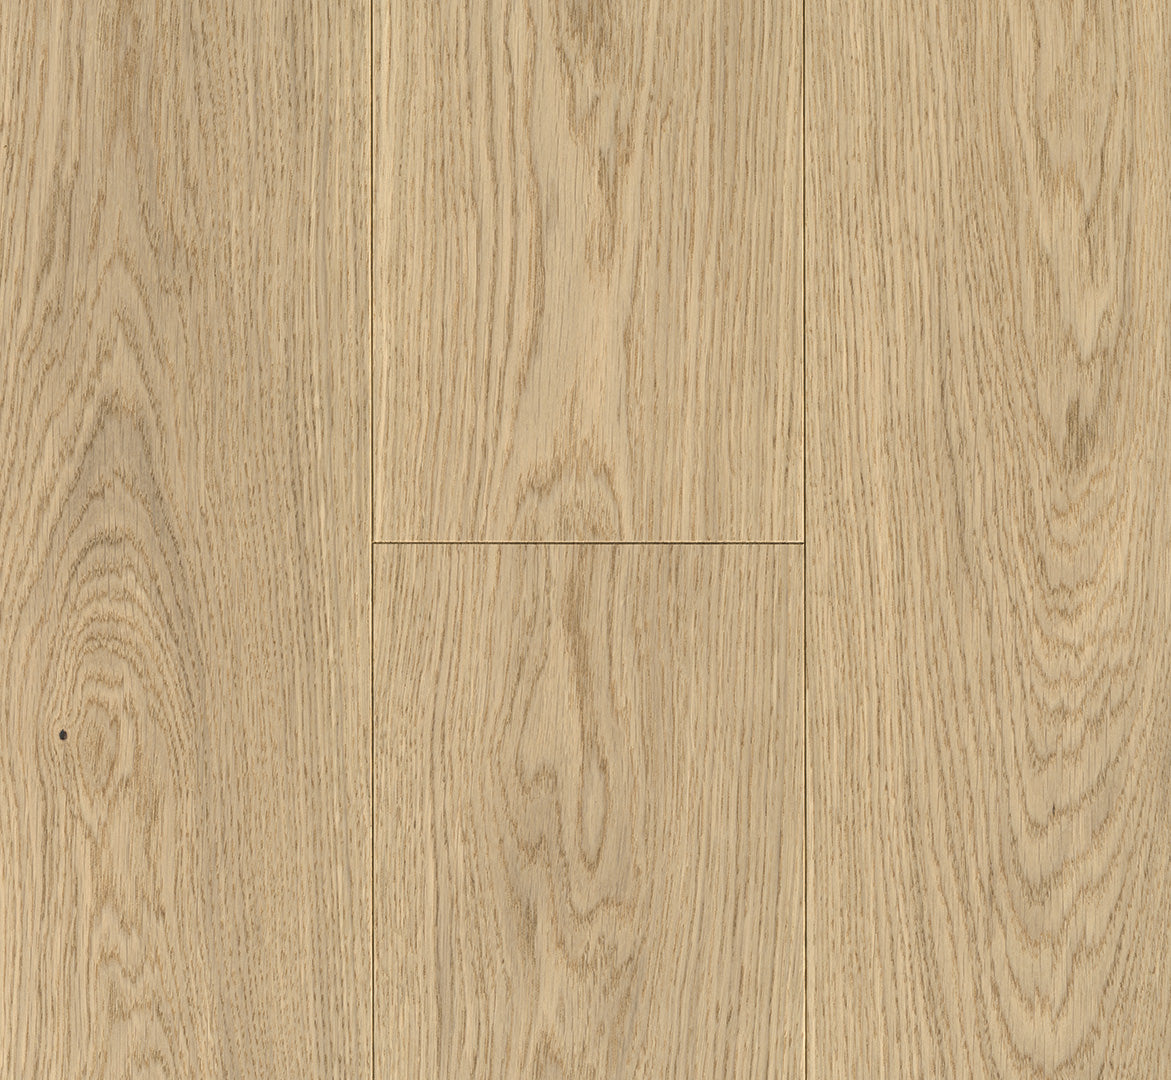 Oak Pure Basic 11-5 Wide Plank Matt Lacquer (2200 x 185 x 11.5 mm)